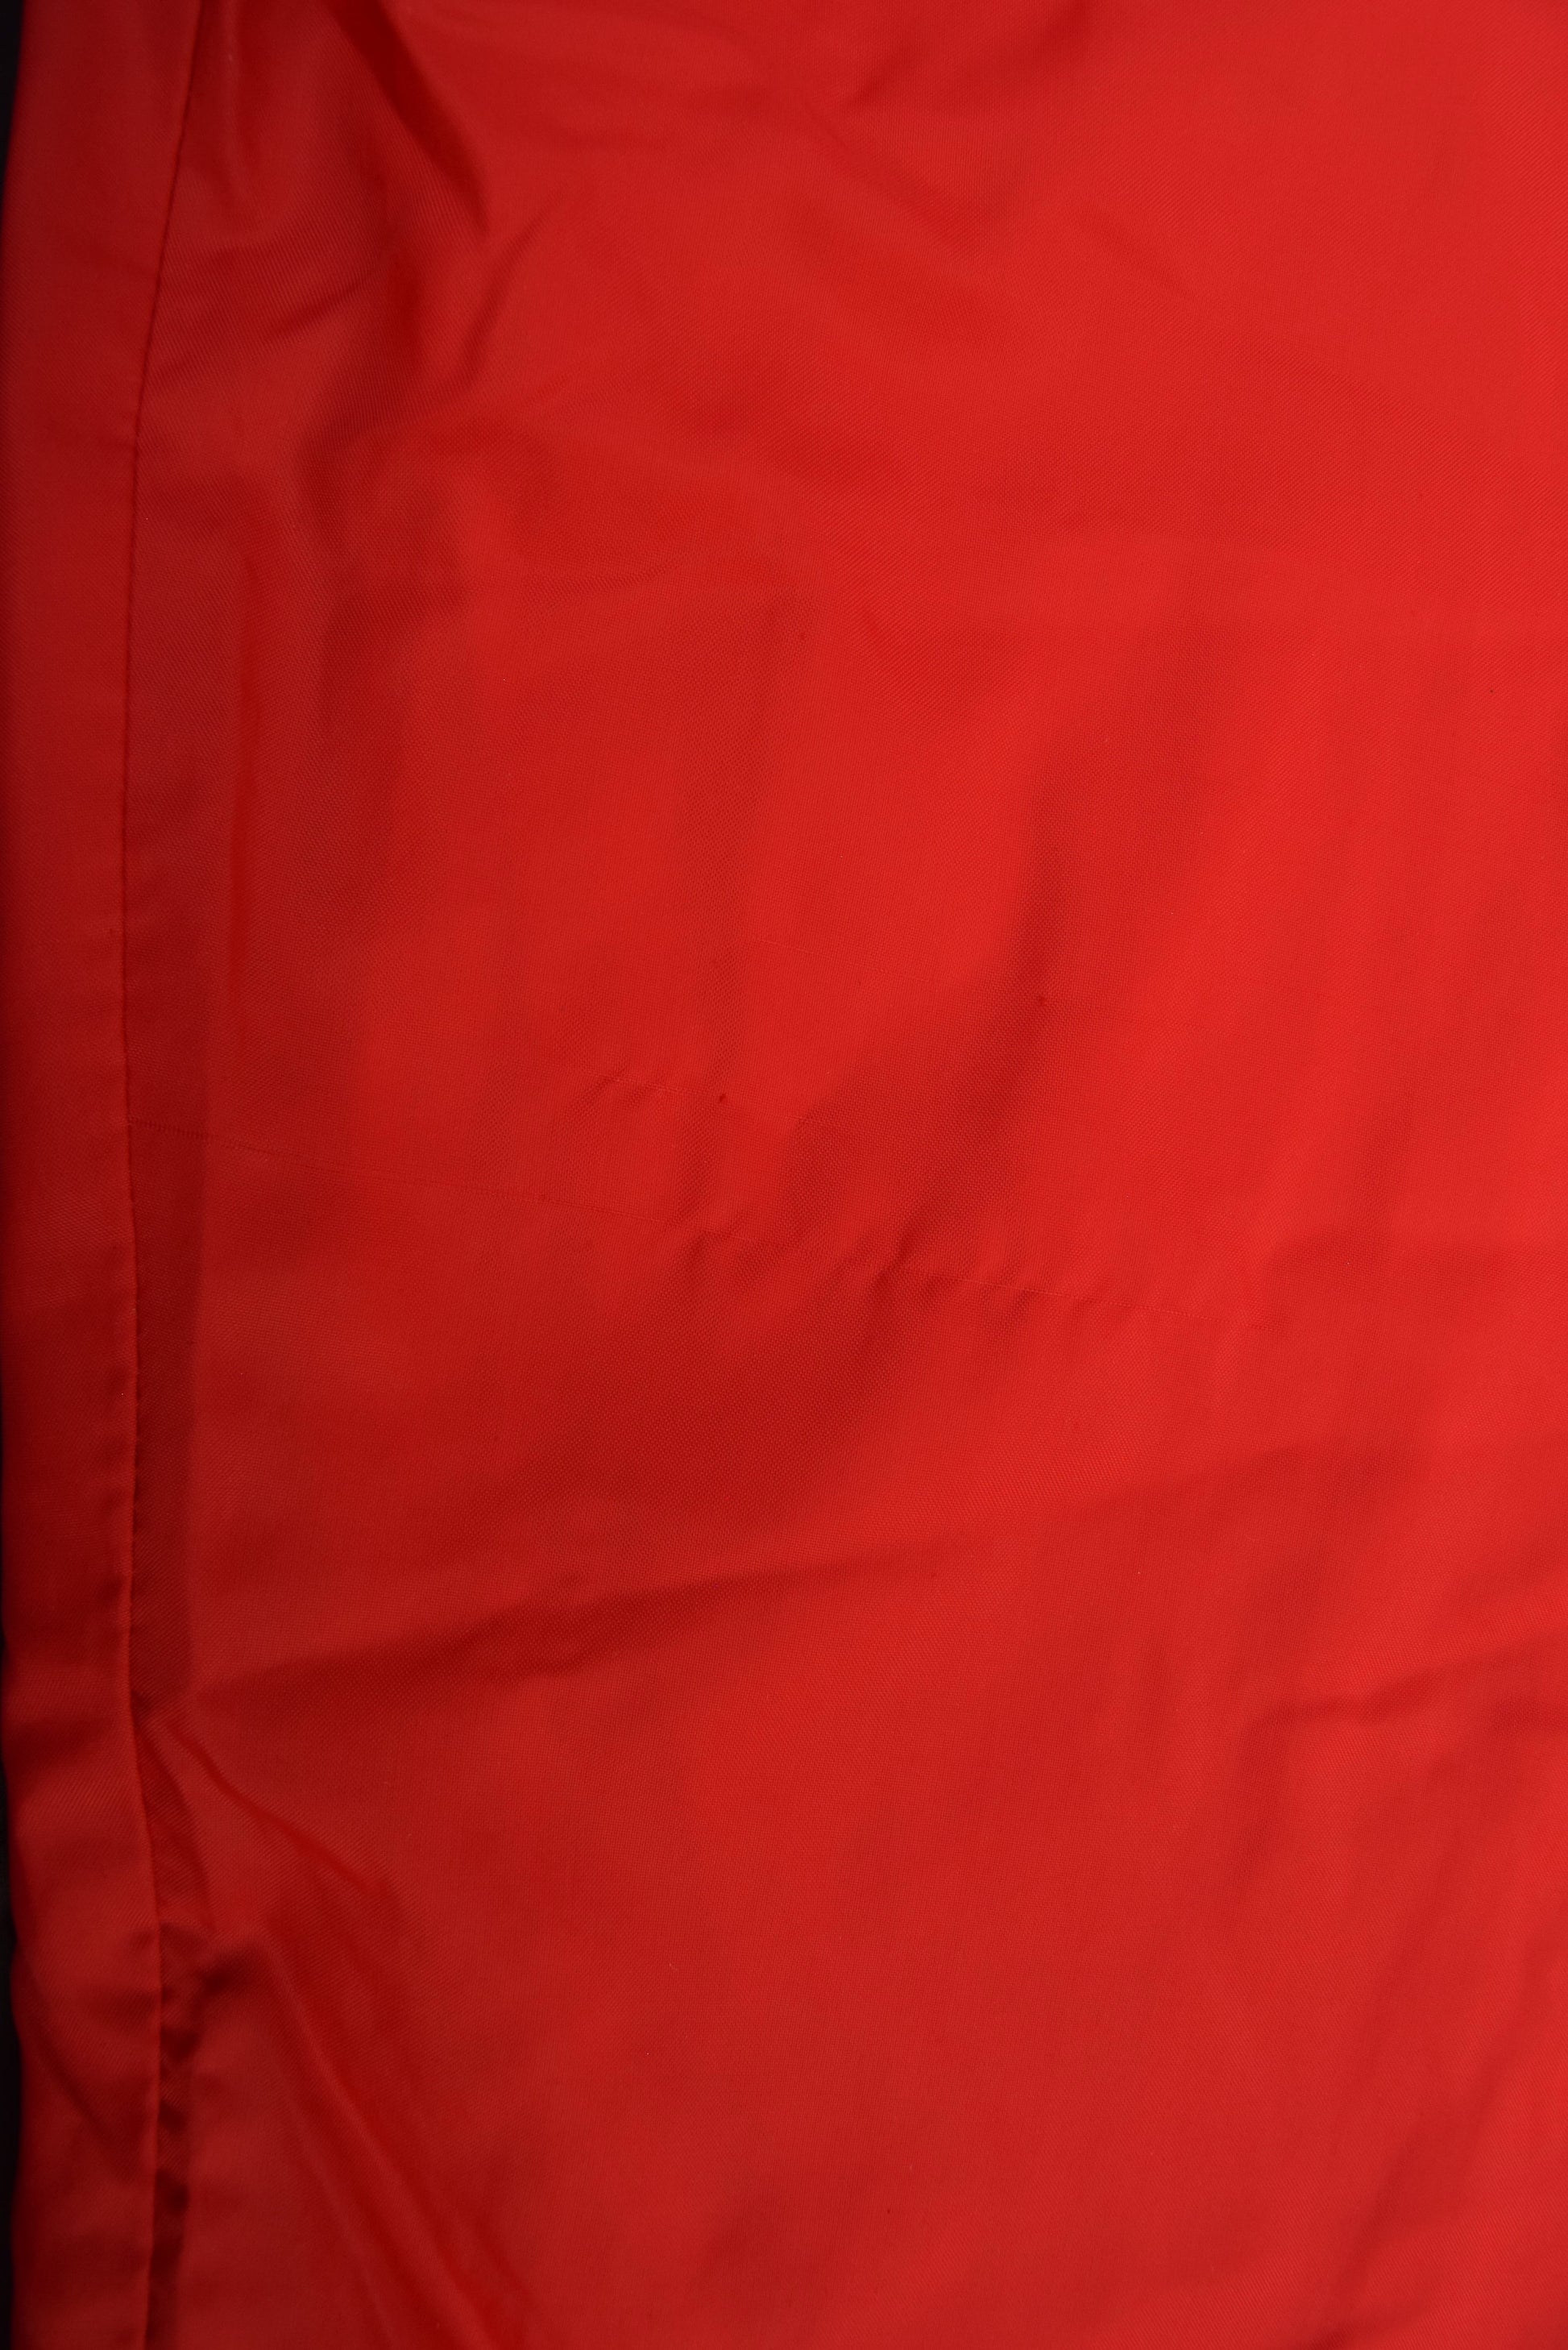 Vintage 90's Nike Jacket Shell Size XL Red Grey Blue Black